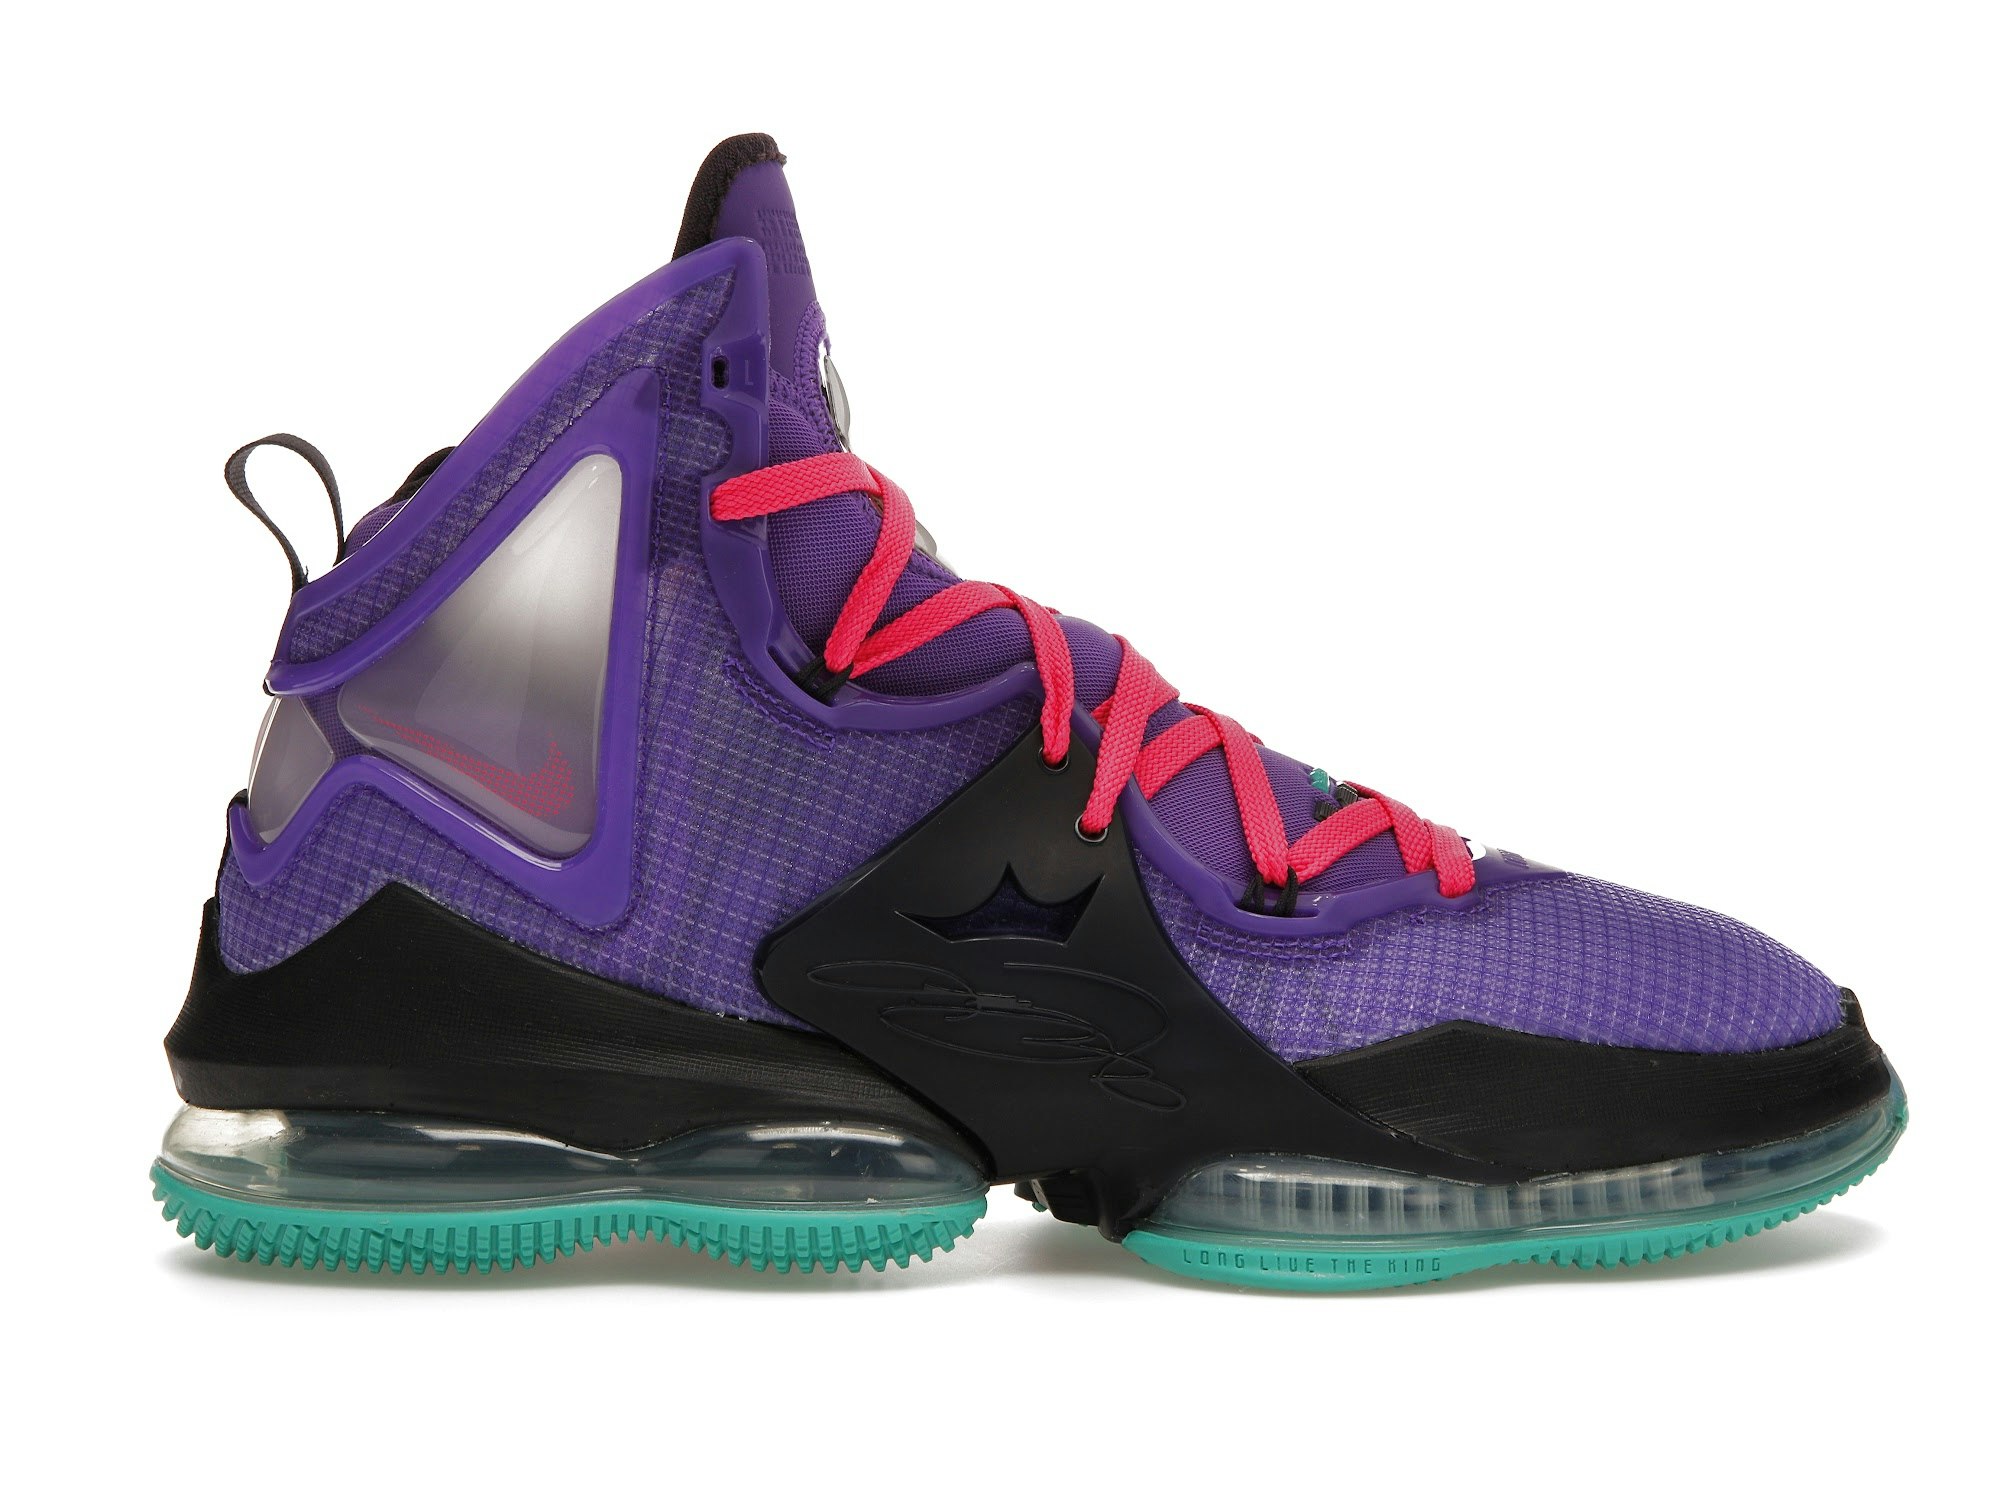 Lakers LeBron James Signed 2009 Nike Zoom Soldier III Shoes w/ Box UDA  #SHO72196